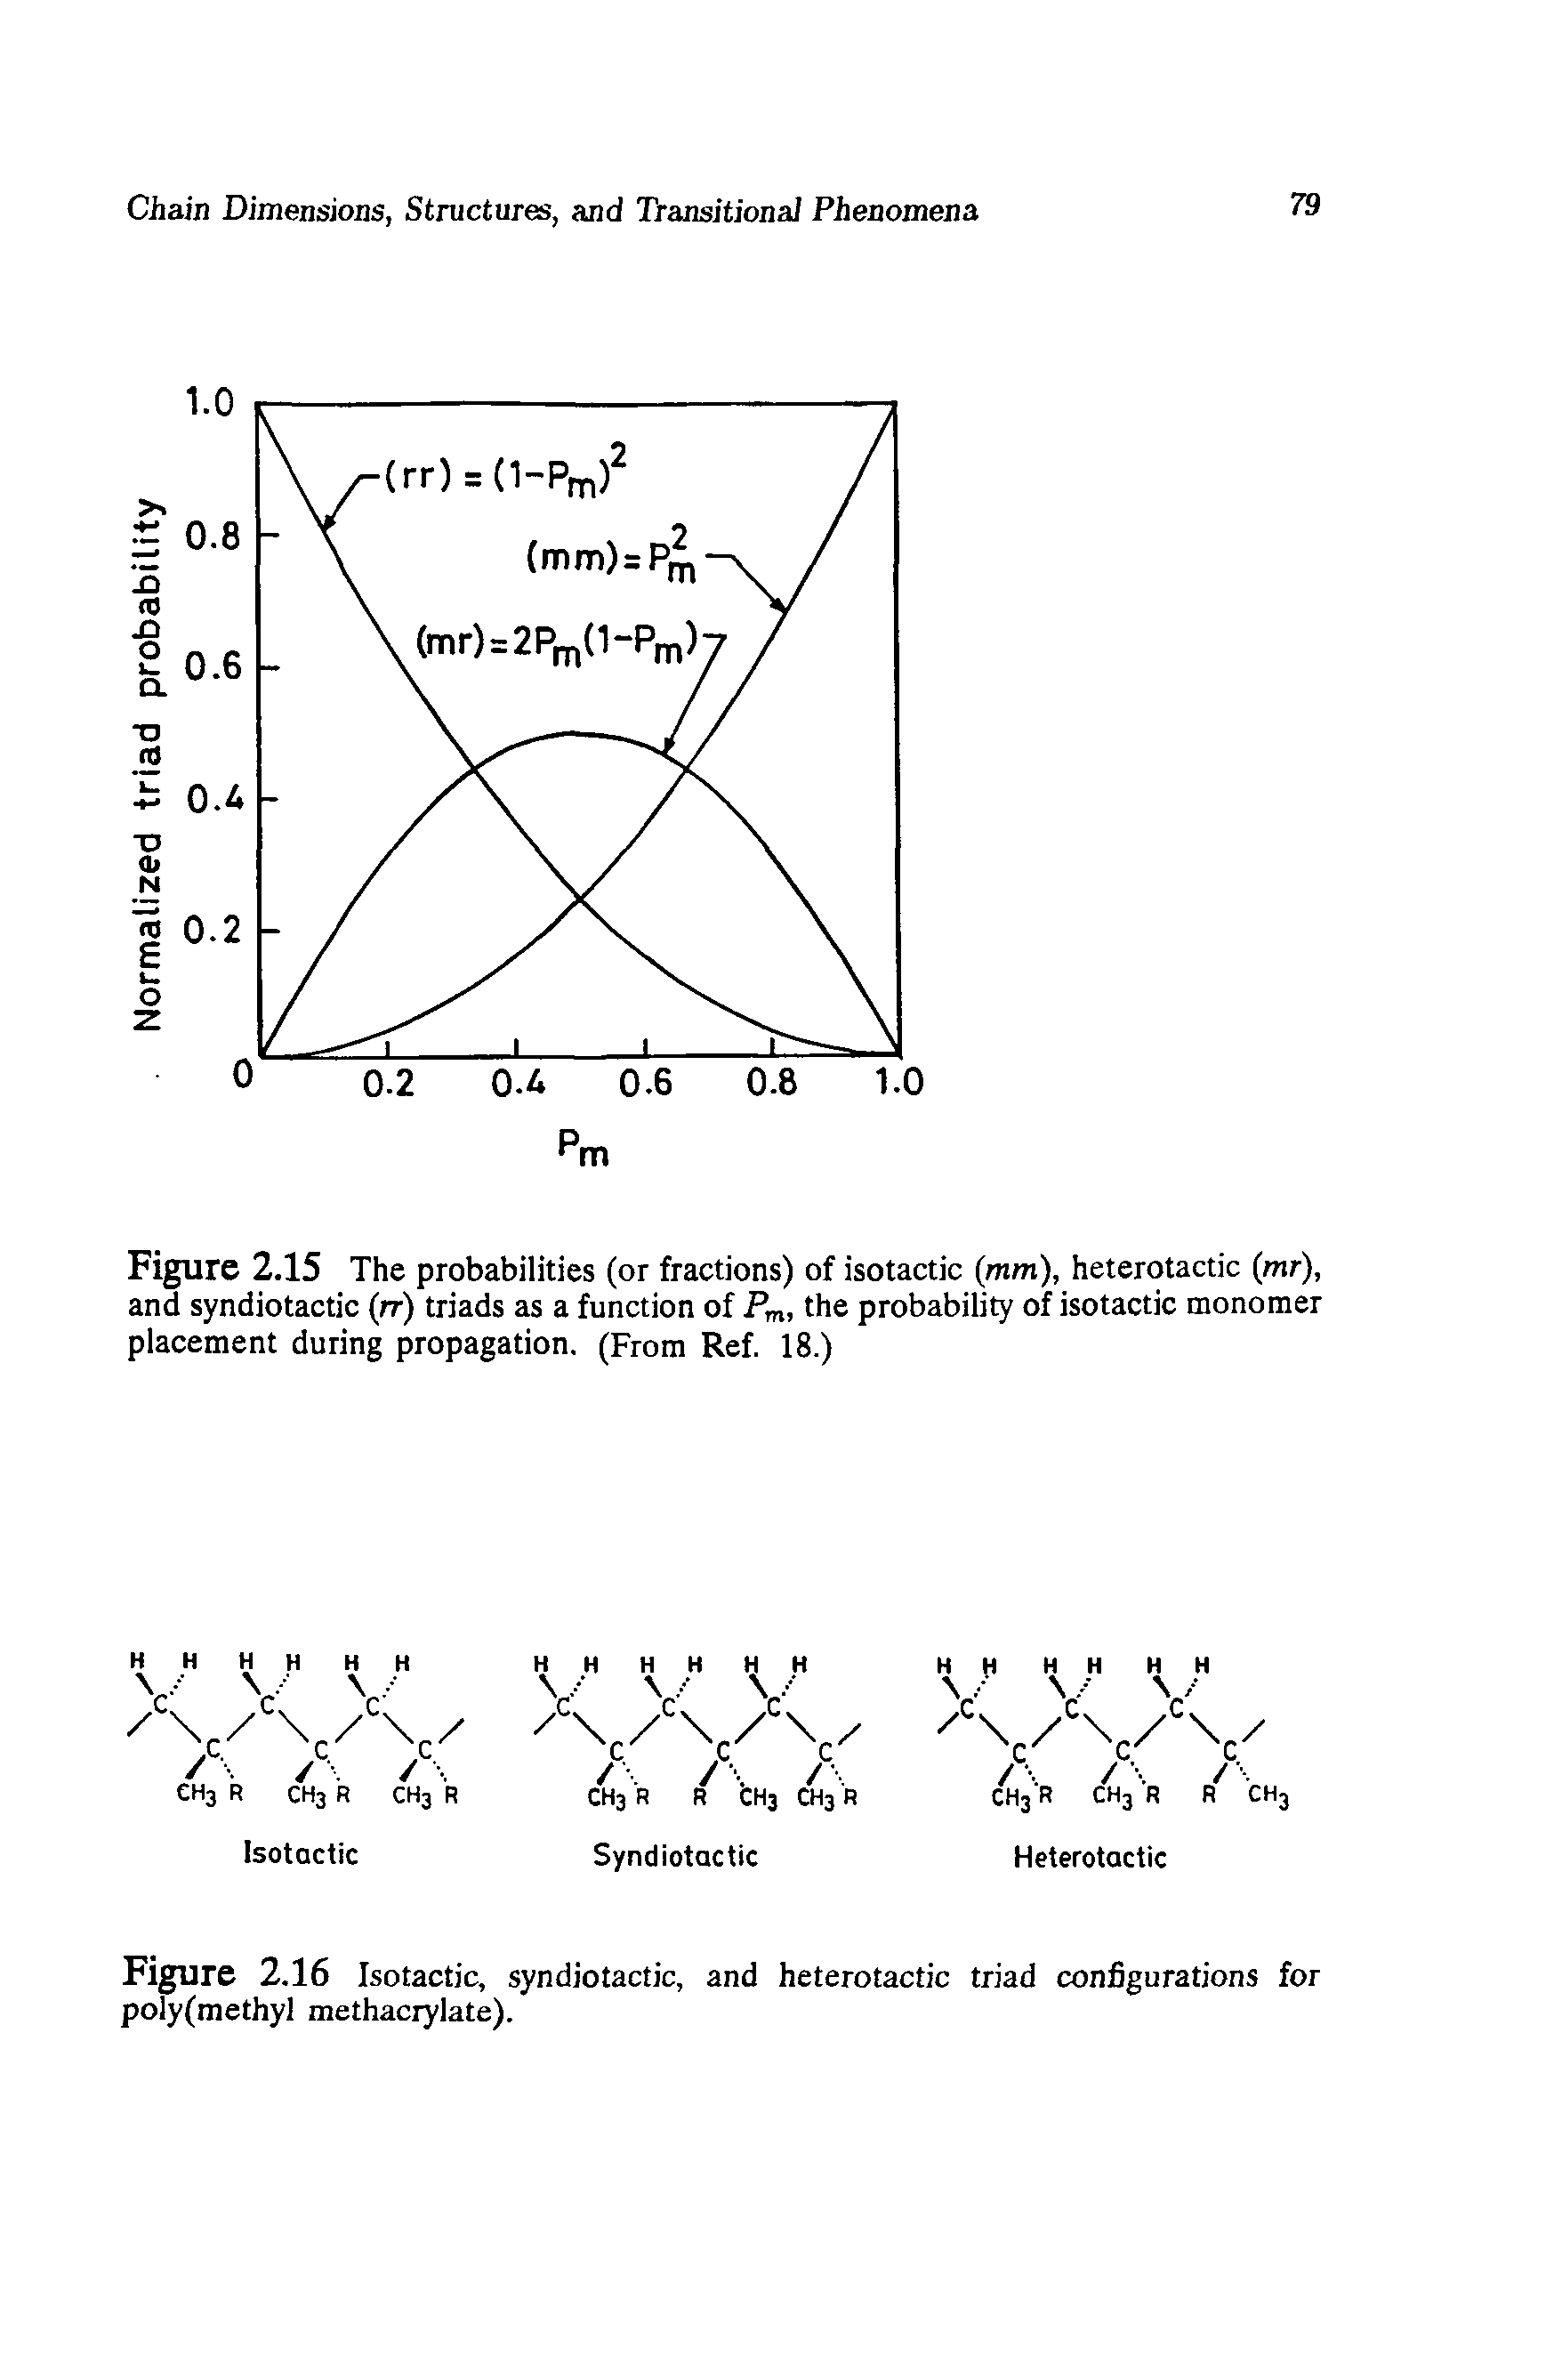 Figure 2.16 Isotactic, syndiotactic, and heterotactic triad configurations for poly(methyl methacrylate).